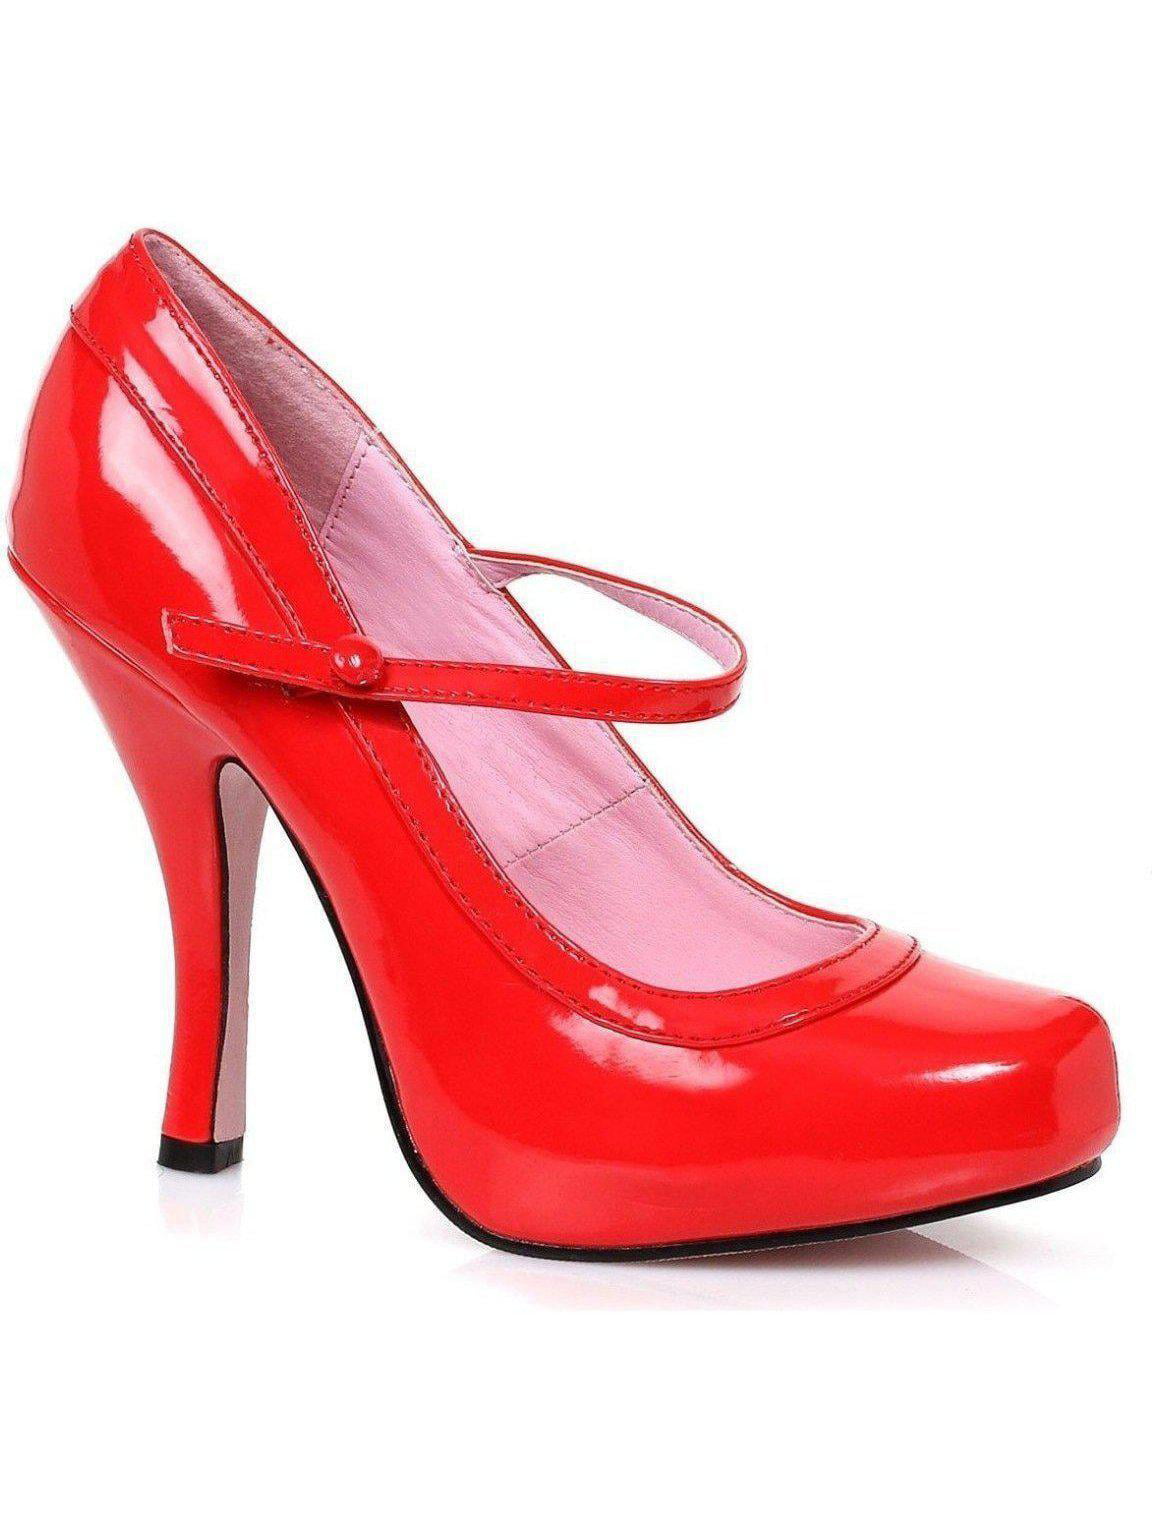 Pleaser Bordello Teeze-06Gw - Red Glitter in Sexy Heels & Platforms - $87.95